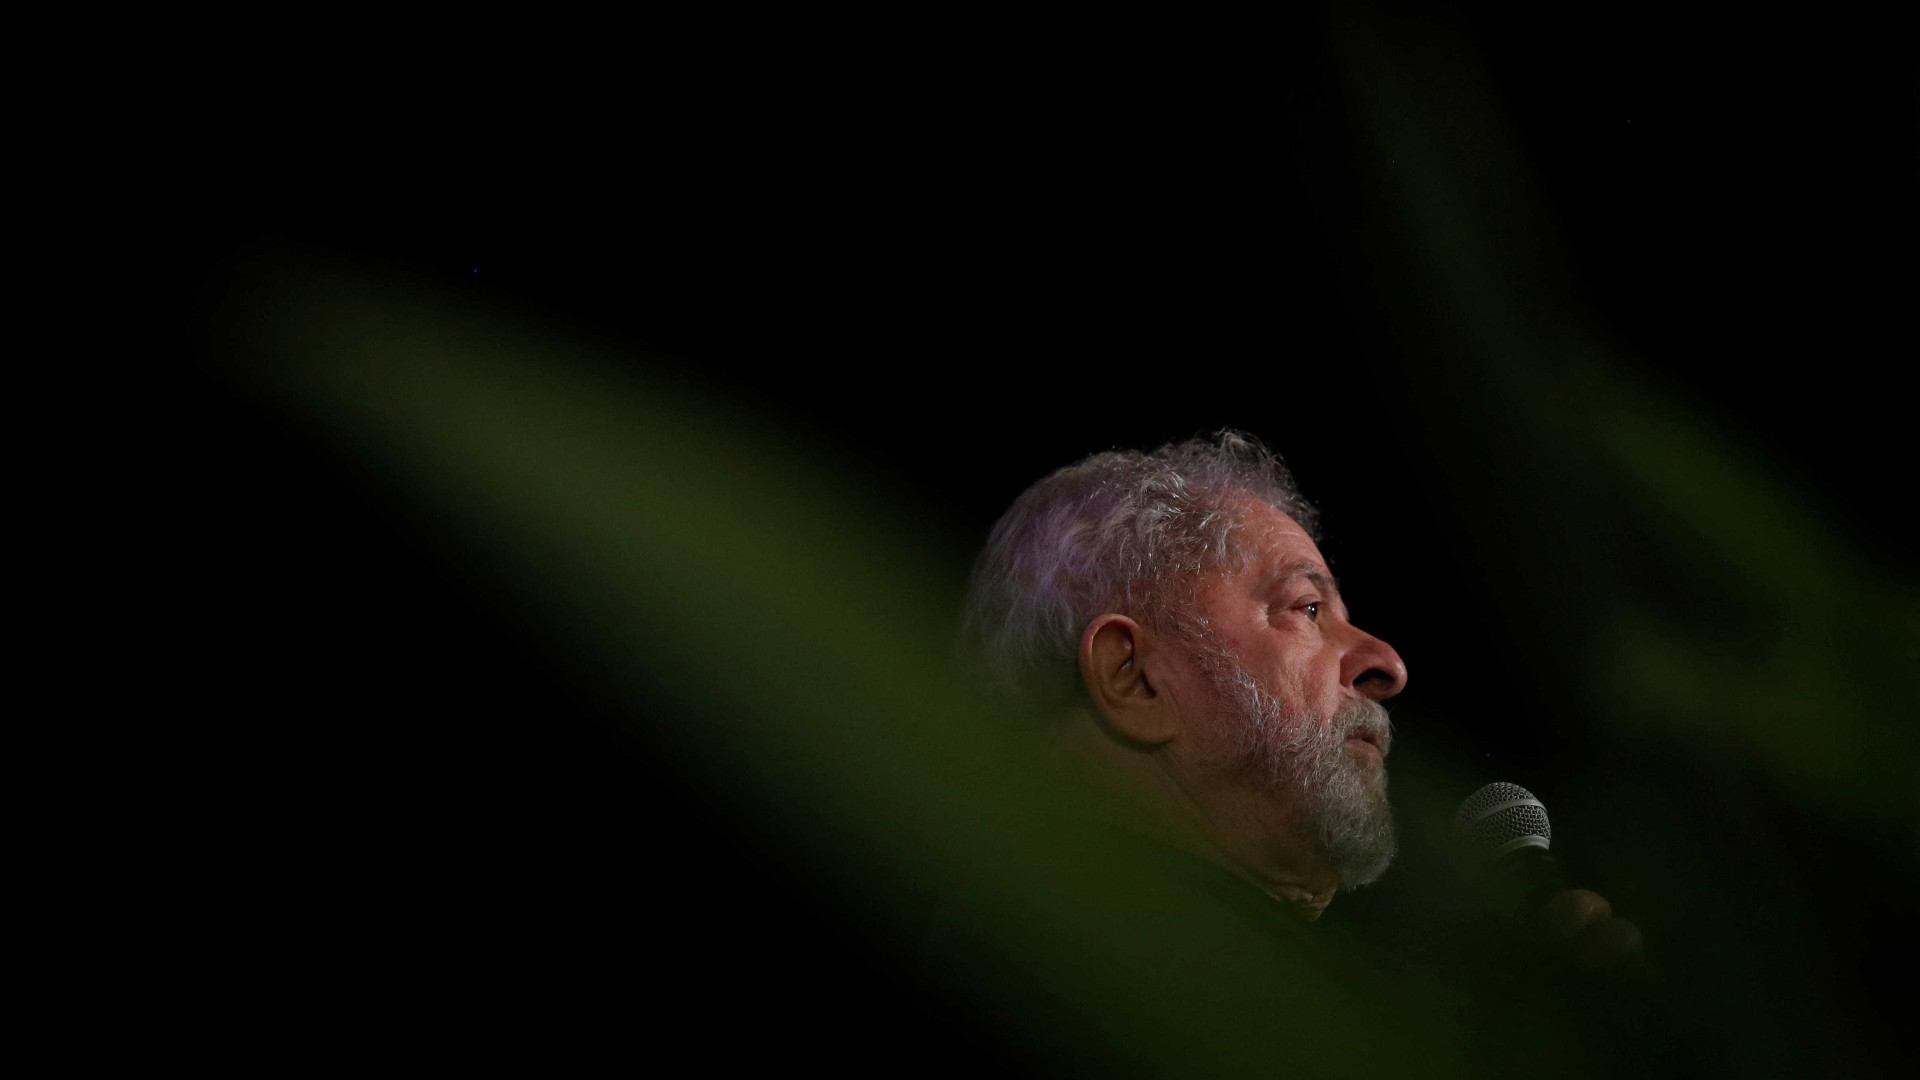 Lula pode ser preso no dia 24? Entenda como será o julgamento